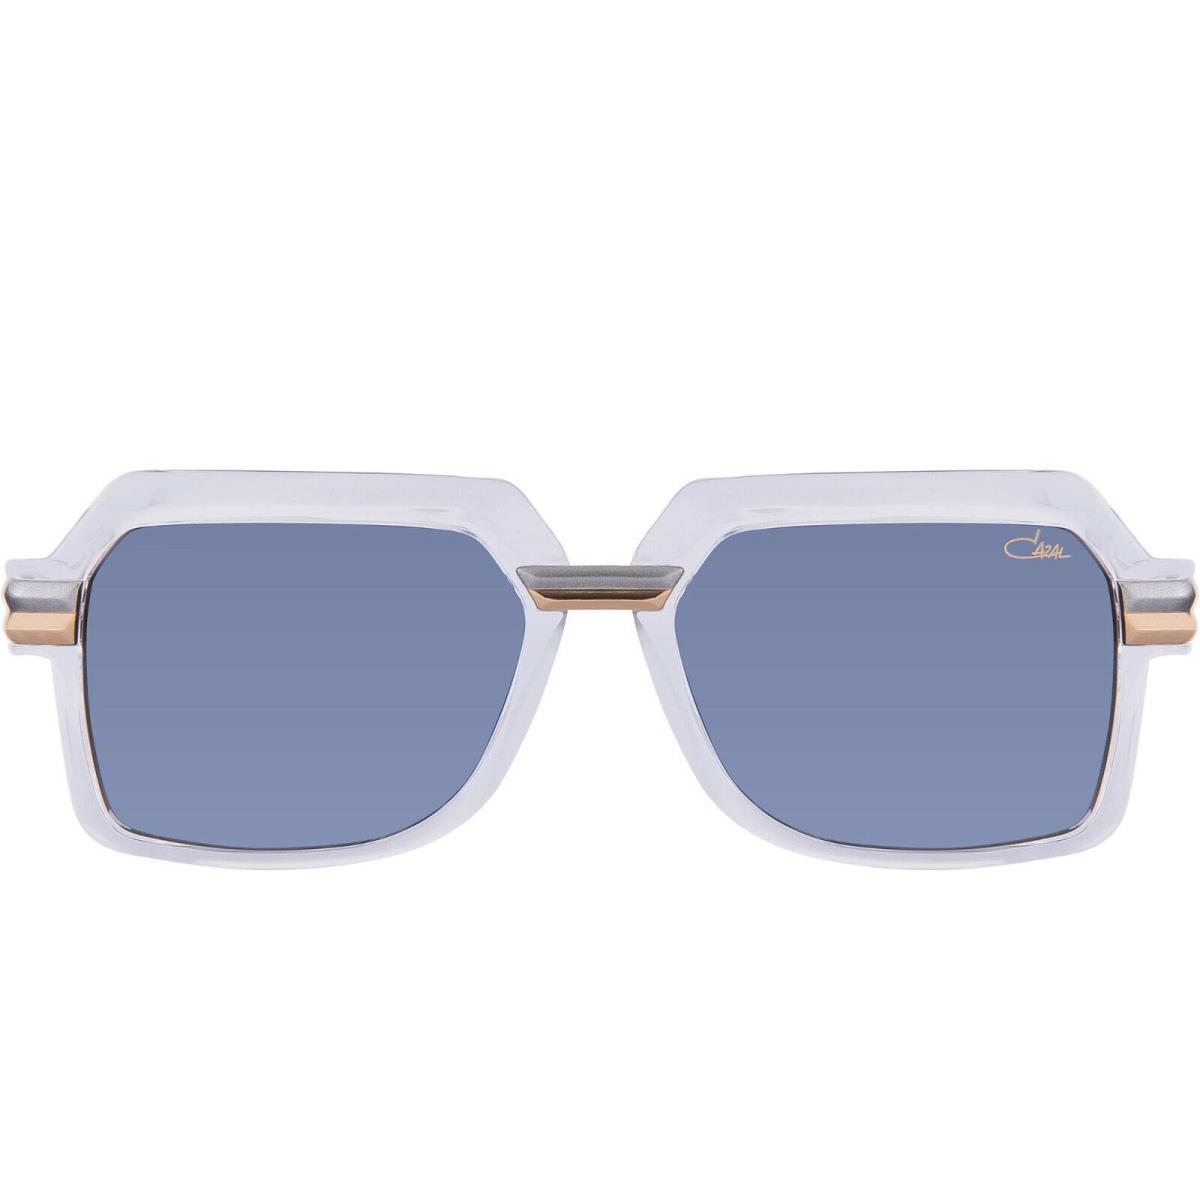 Cazal 8043 Crystal/blue Shaded 003 Sunglasses